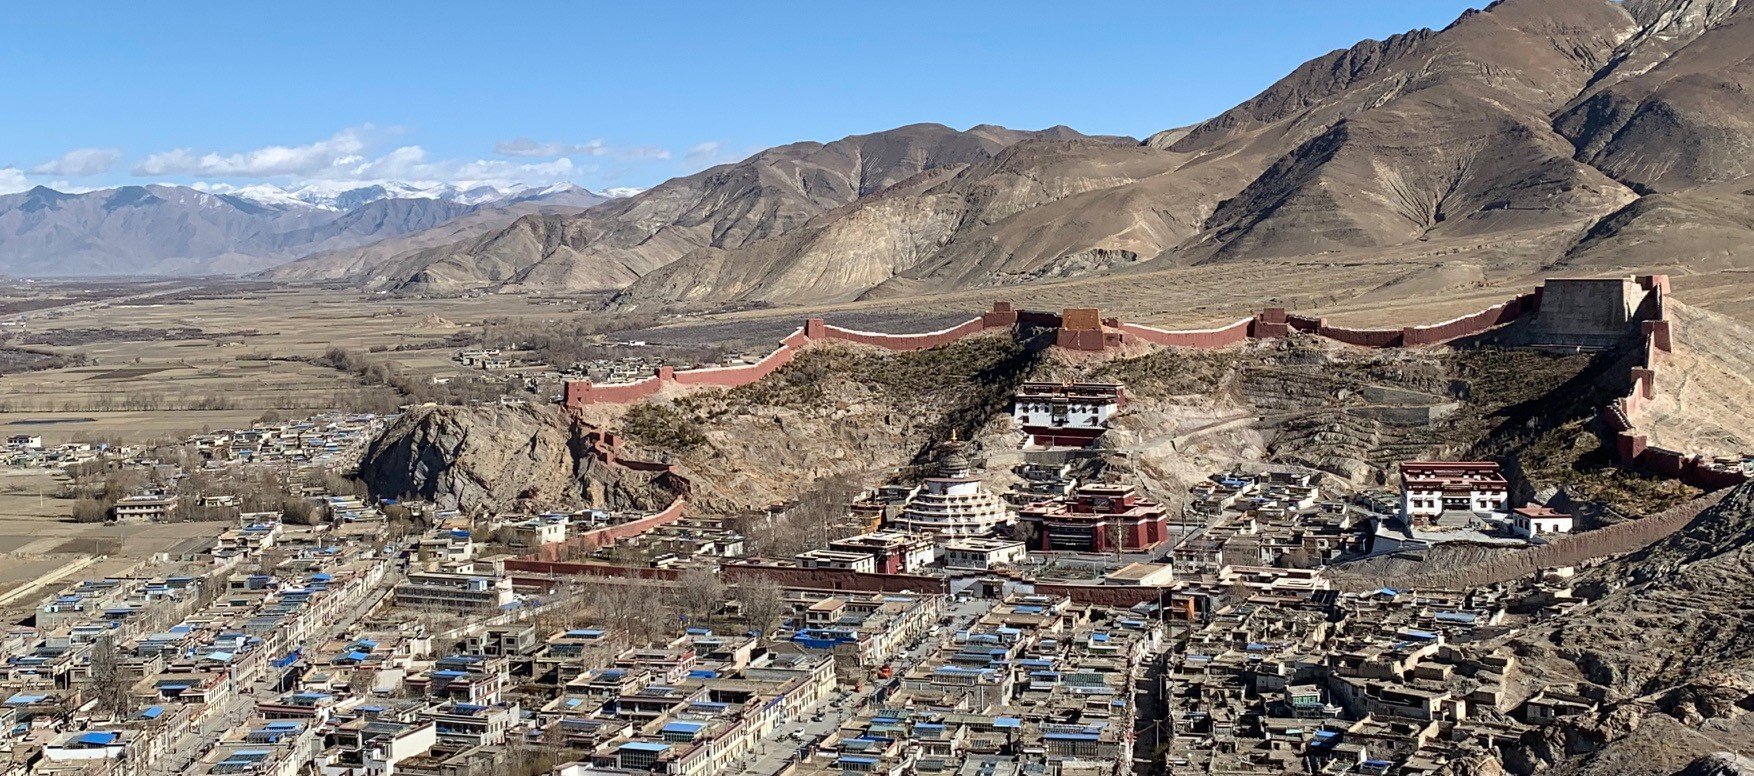 Panoramic view of the city of Gyantse, Tibet.